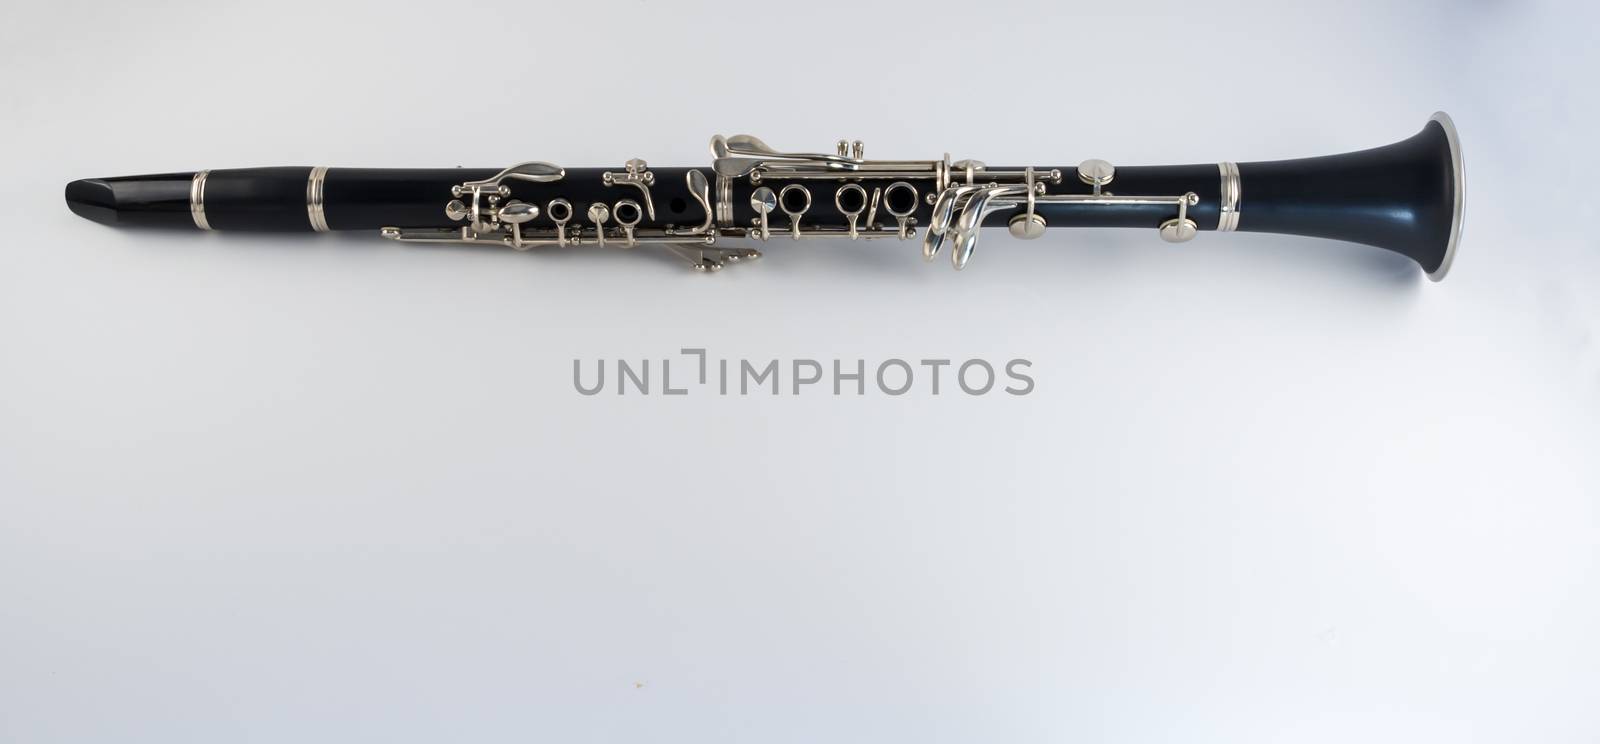 Black clarinet musical instrument on white background